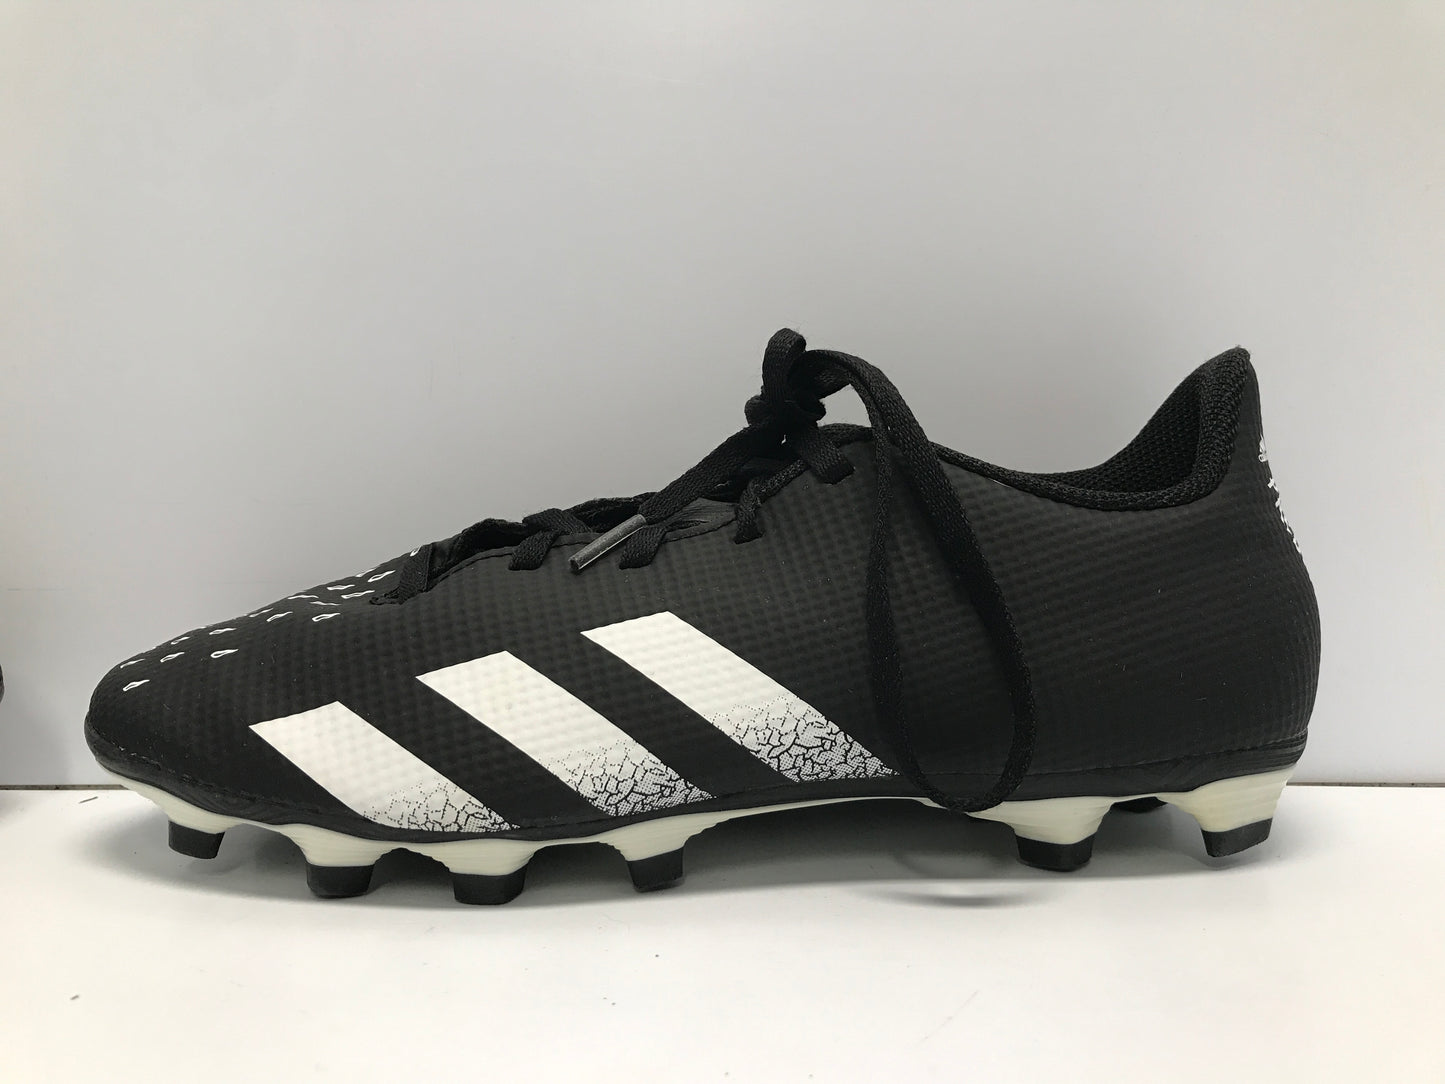 Soccer Shoes Cleats Men's Size 7 Adidas Preditor Rain Drops Black White Like New